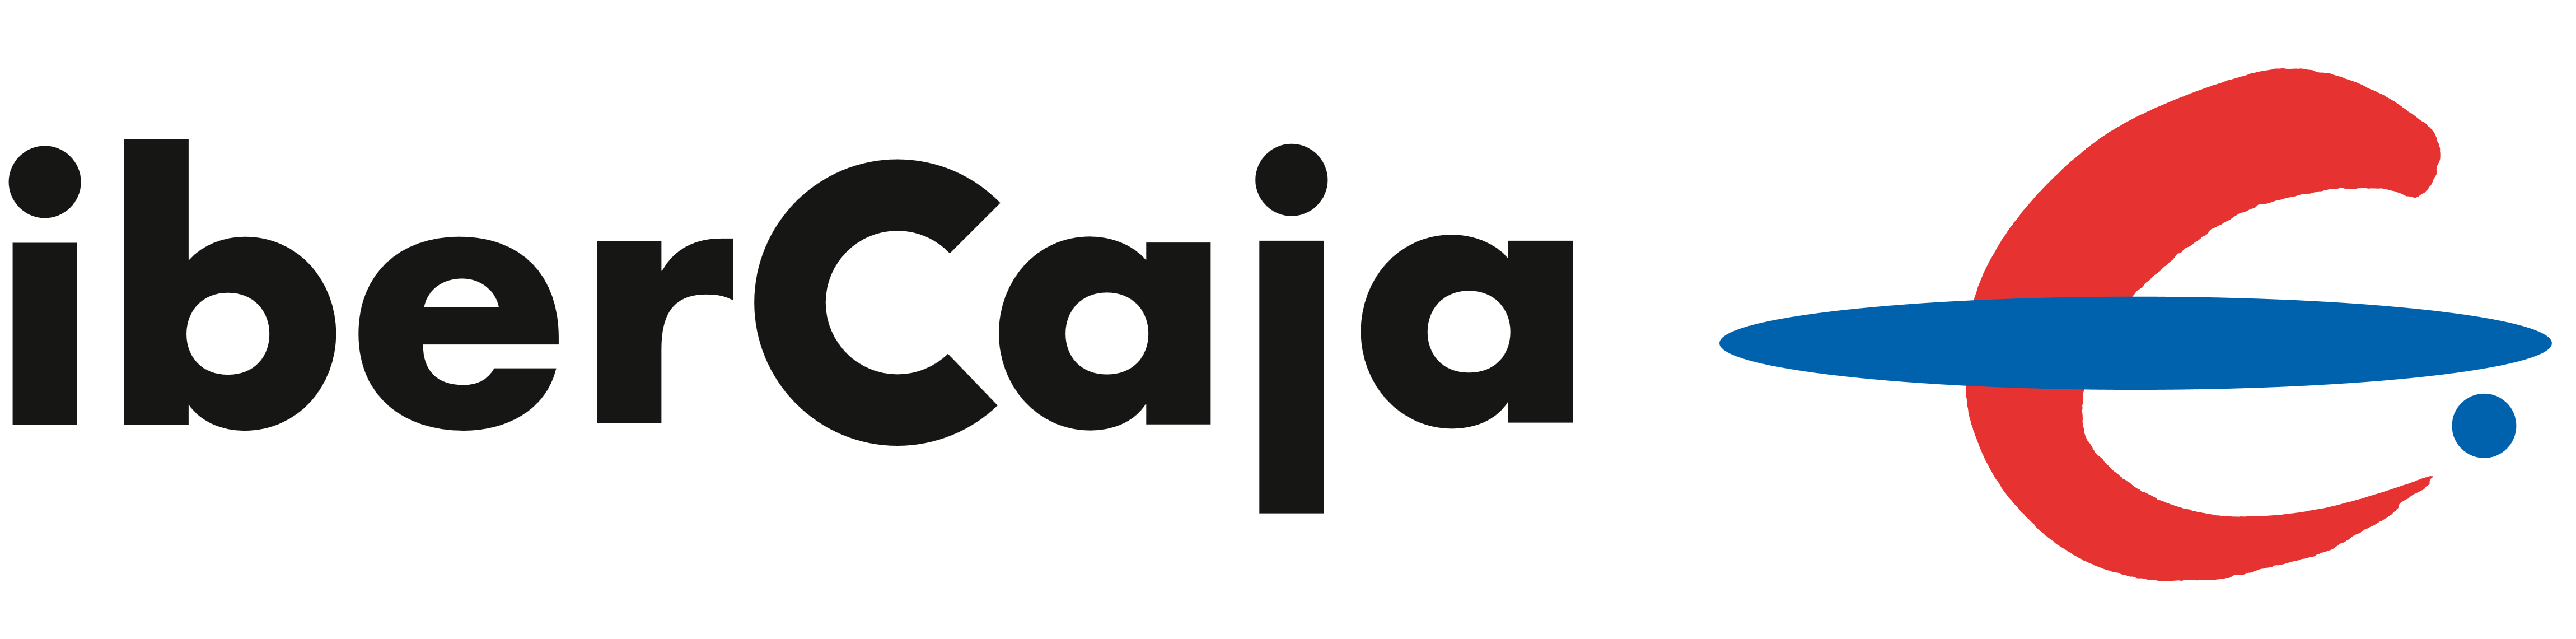 Ibercaja logo, logotype